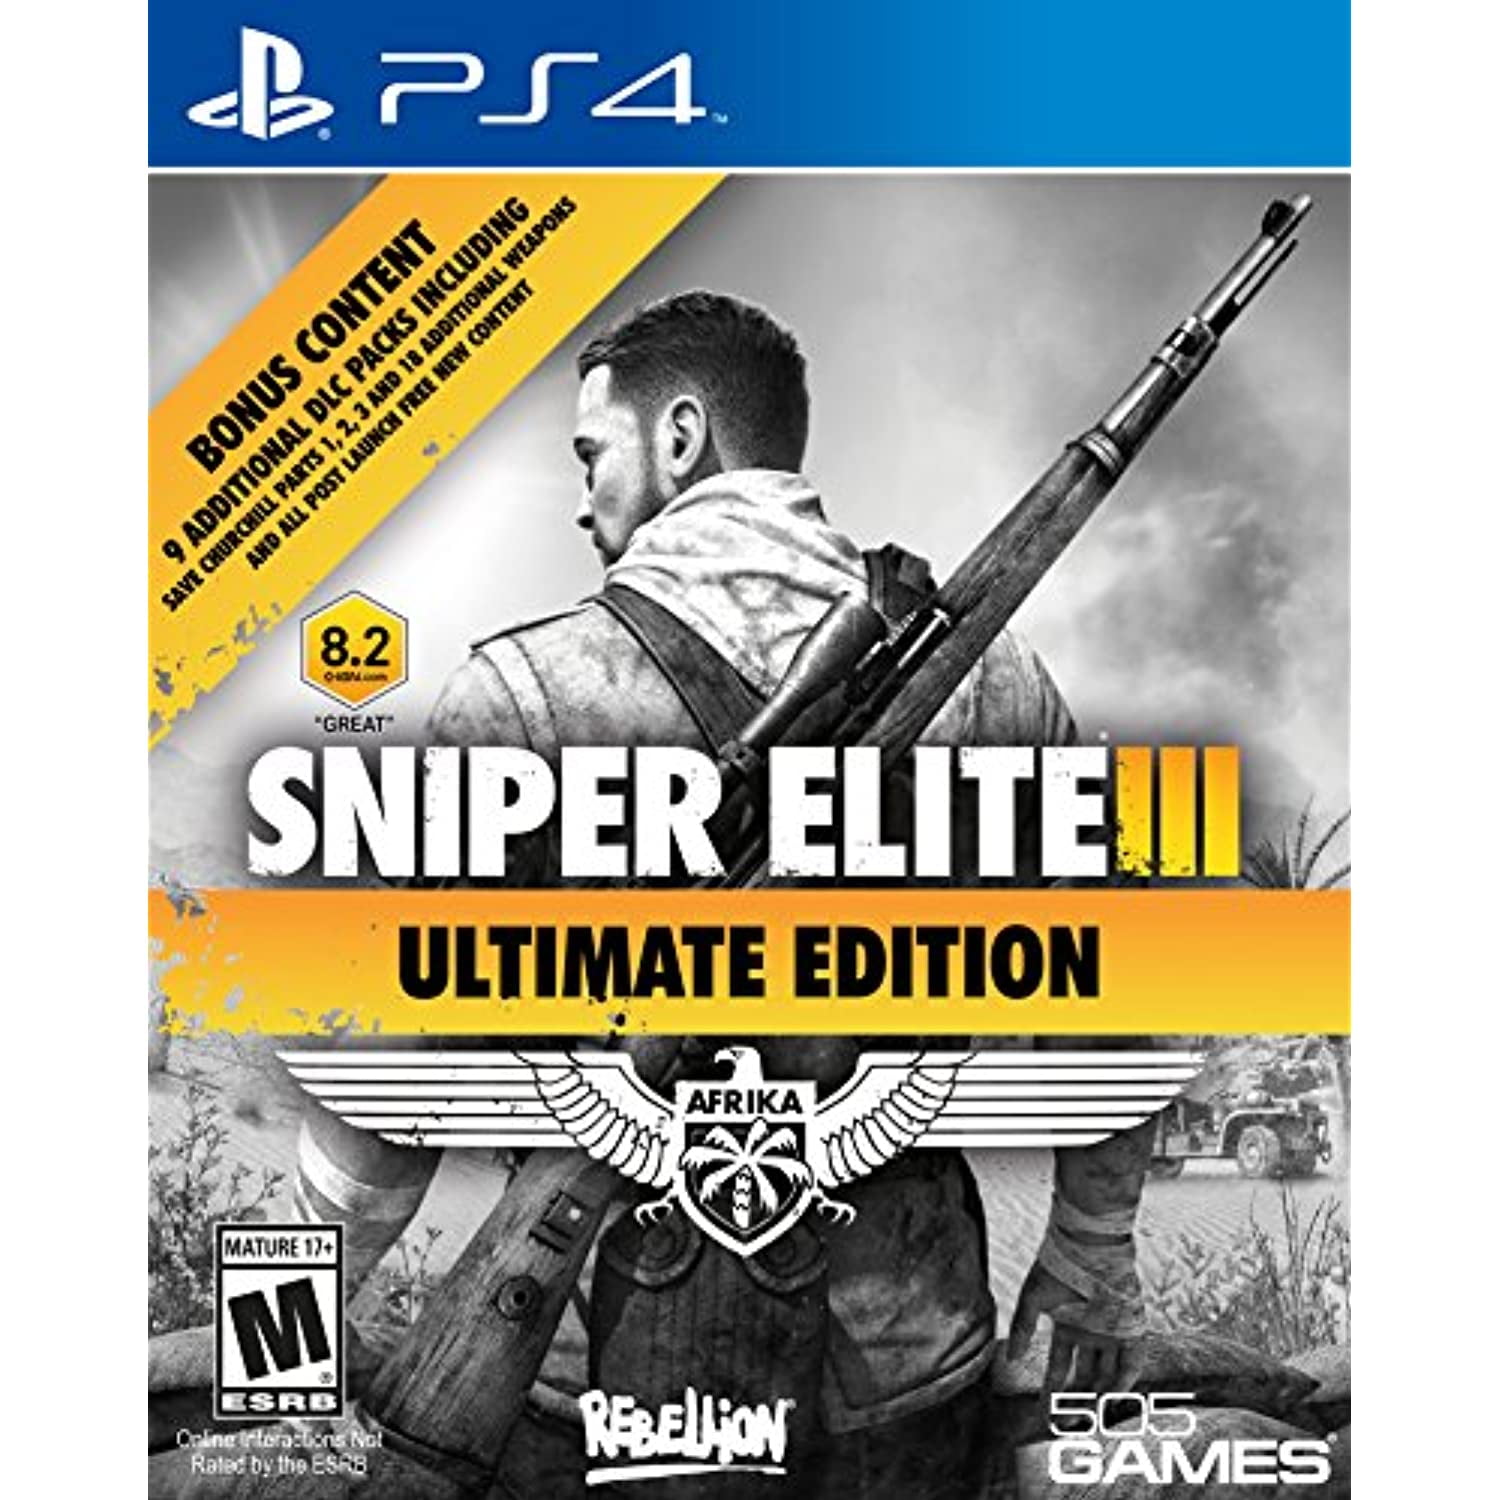 Sniper Elite III Ultimate Edition, 505 Games, PlayStation 4, 812872018447